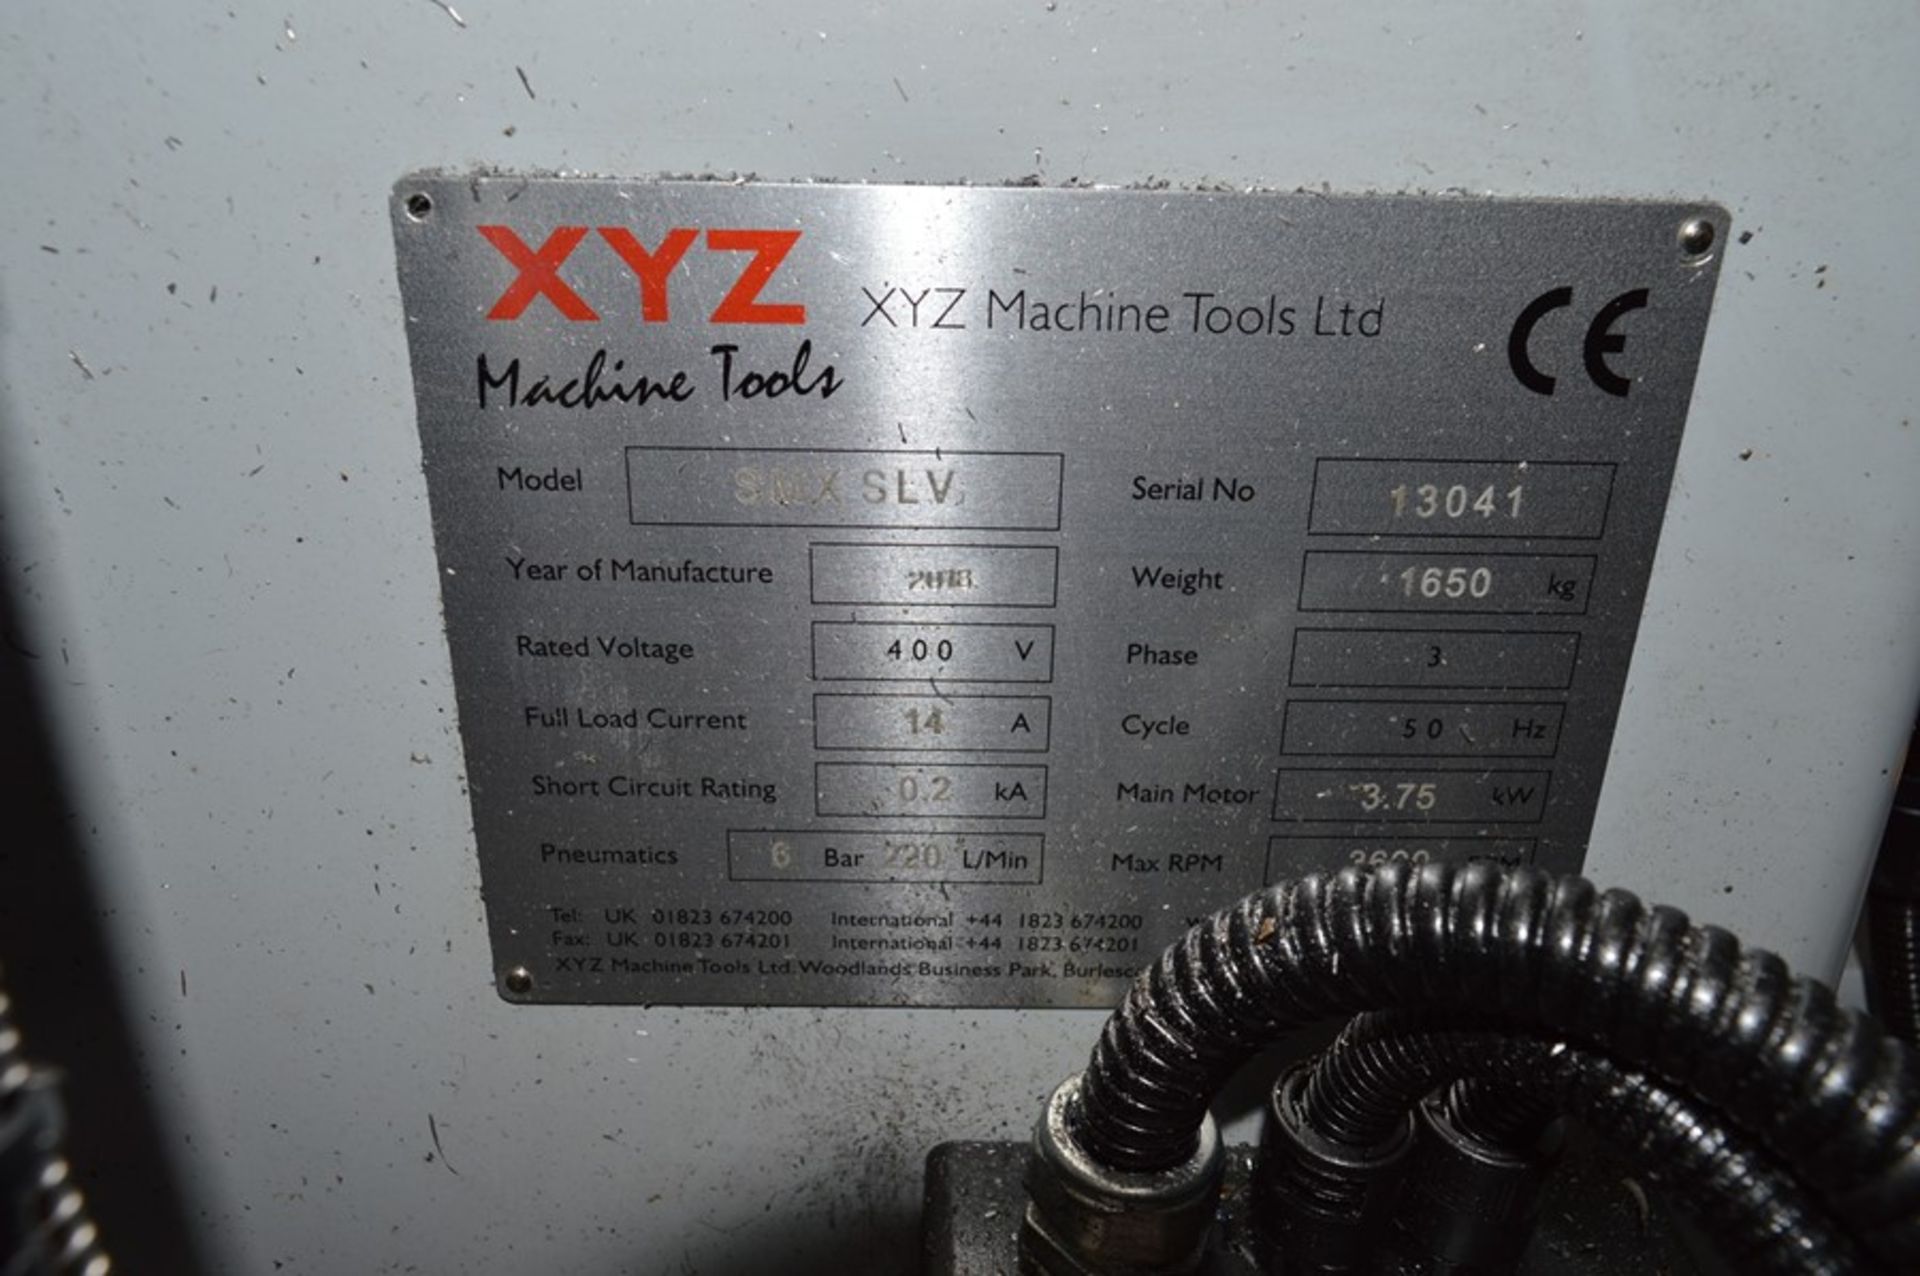 XYZ, SMX2 3000SLV three axis turret head milling machine, Serial No. 13041 (2018) with Proto Trak, - Image 7 of 8